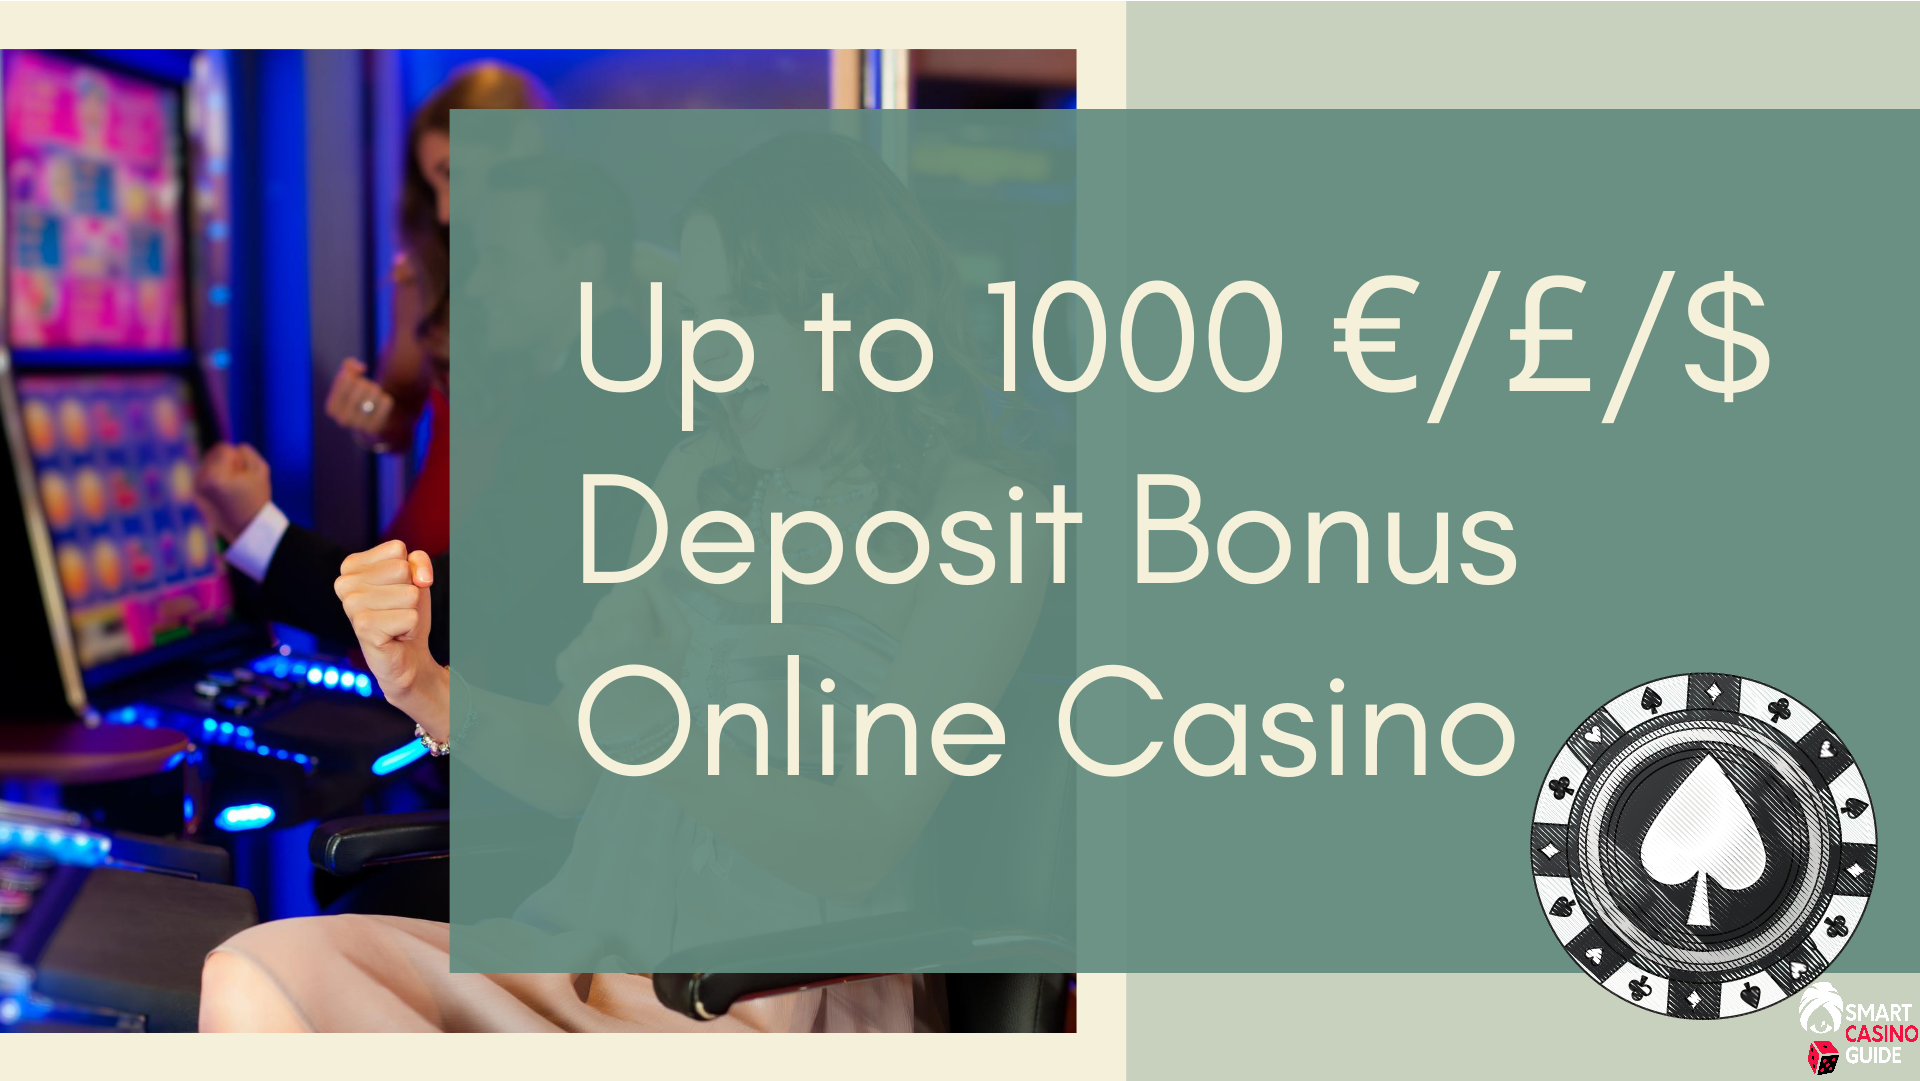 Online Casino Start Up Bonus